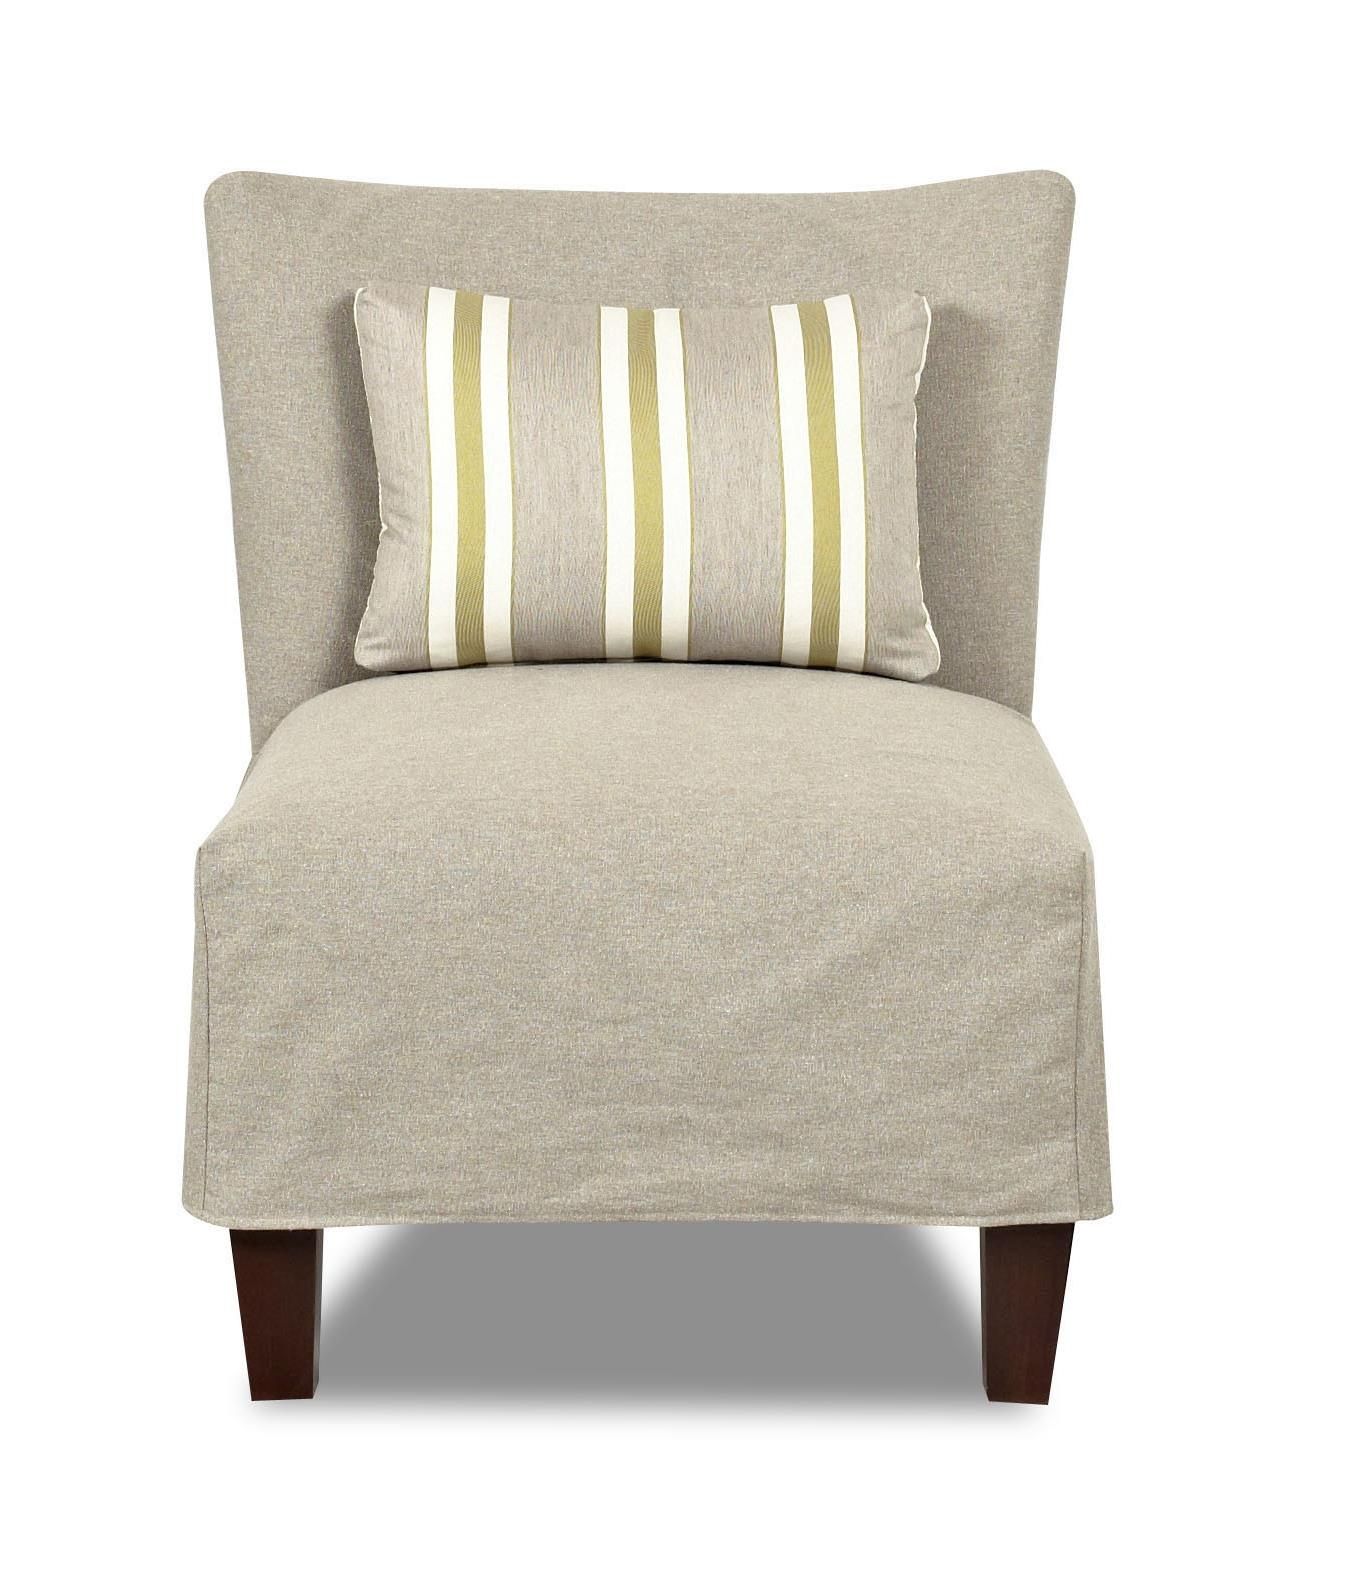 Armless Sofa Chair Slipcovers Sofa Menzilperde Regarding Sofa And Chair Slipcovers (View 4 of 15)